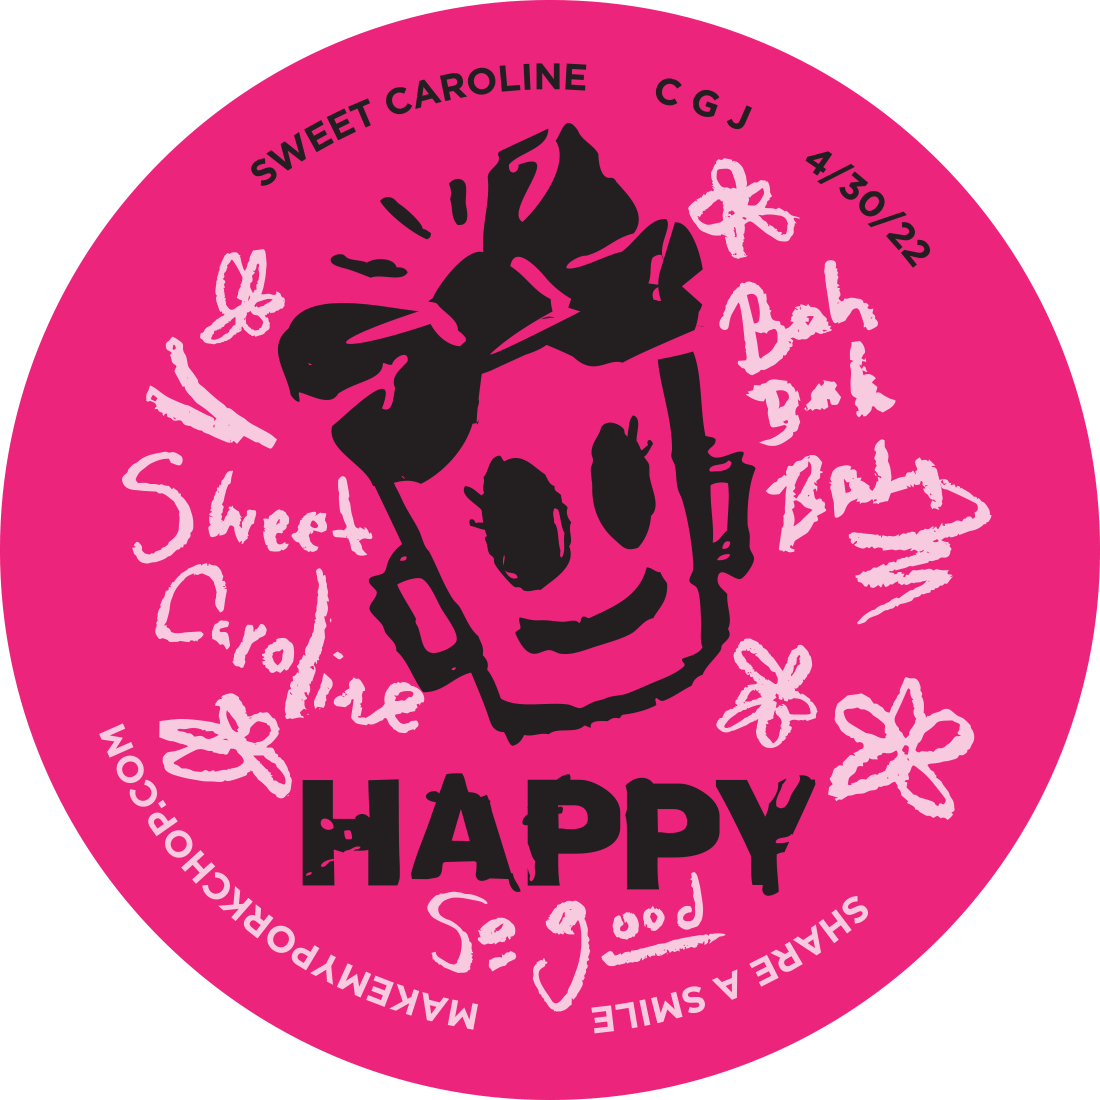 HAPPY - Sweet Caroline